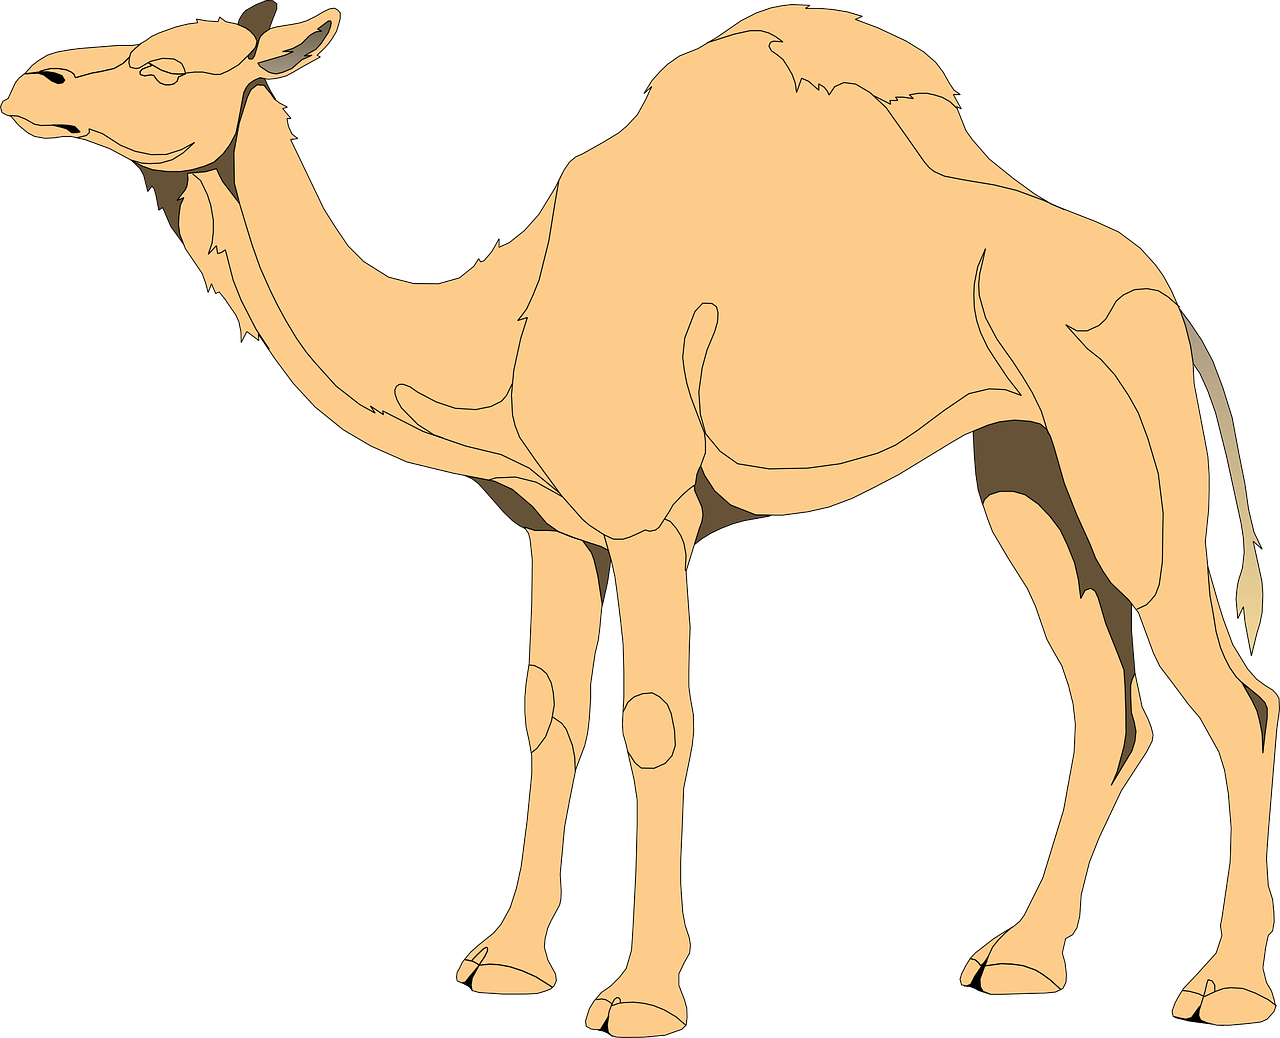 Camel,hump,desert,animal,nature - free image from needpix.com